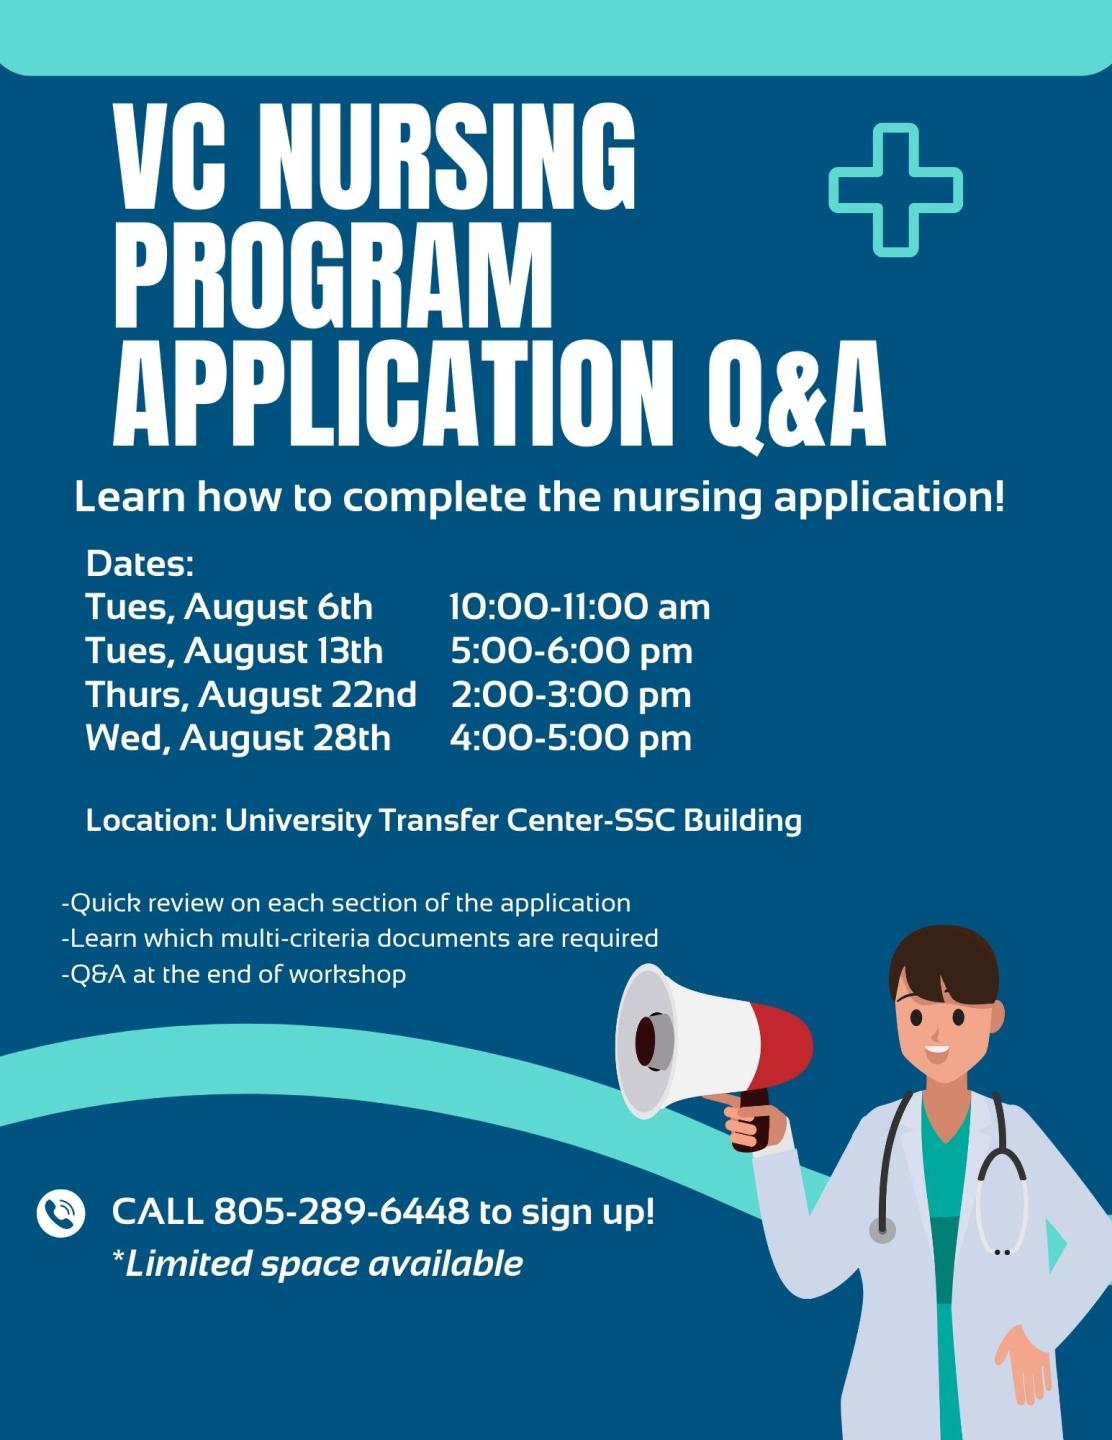 VC Nursing Program Application Q&A